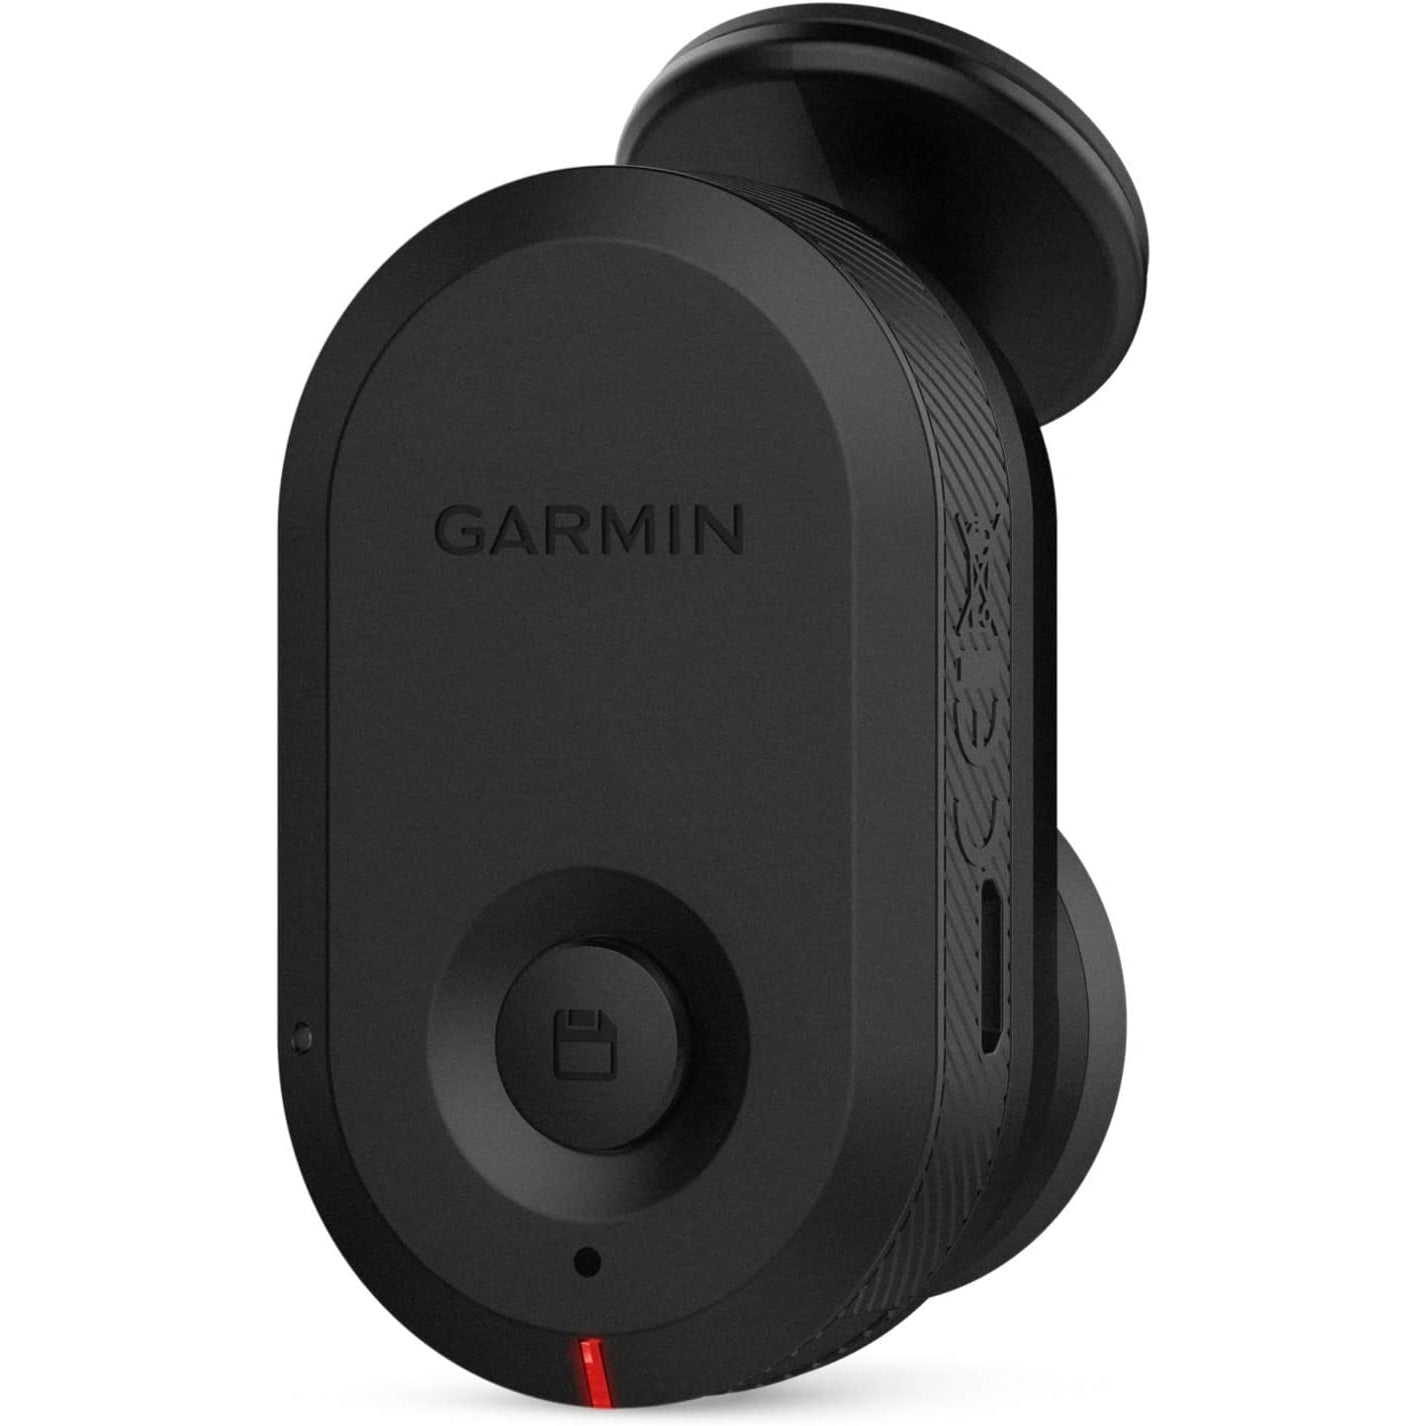 Garmin Dash Cam Mini - Black - Refurbished Good